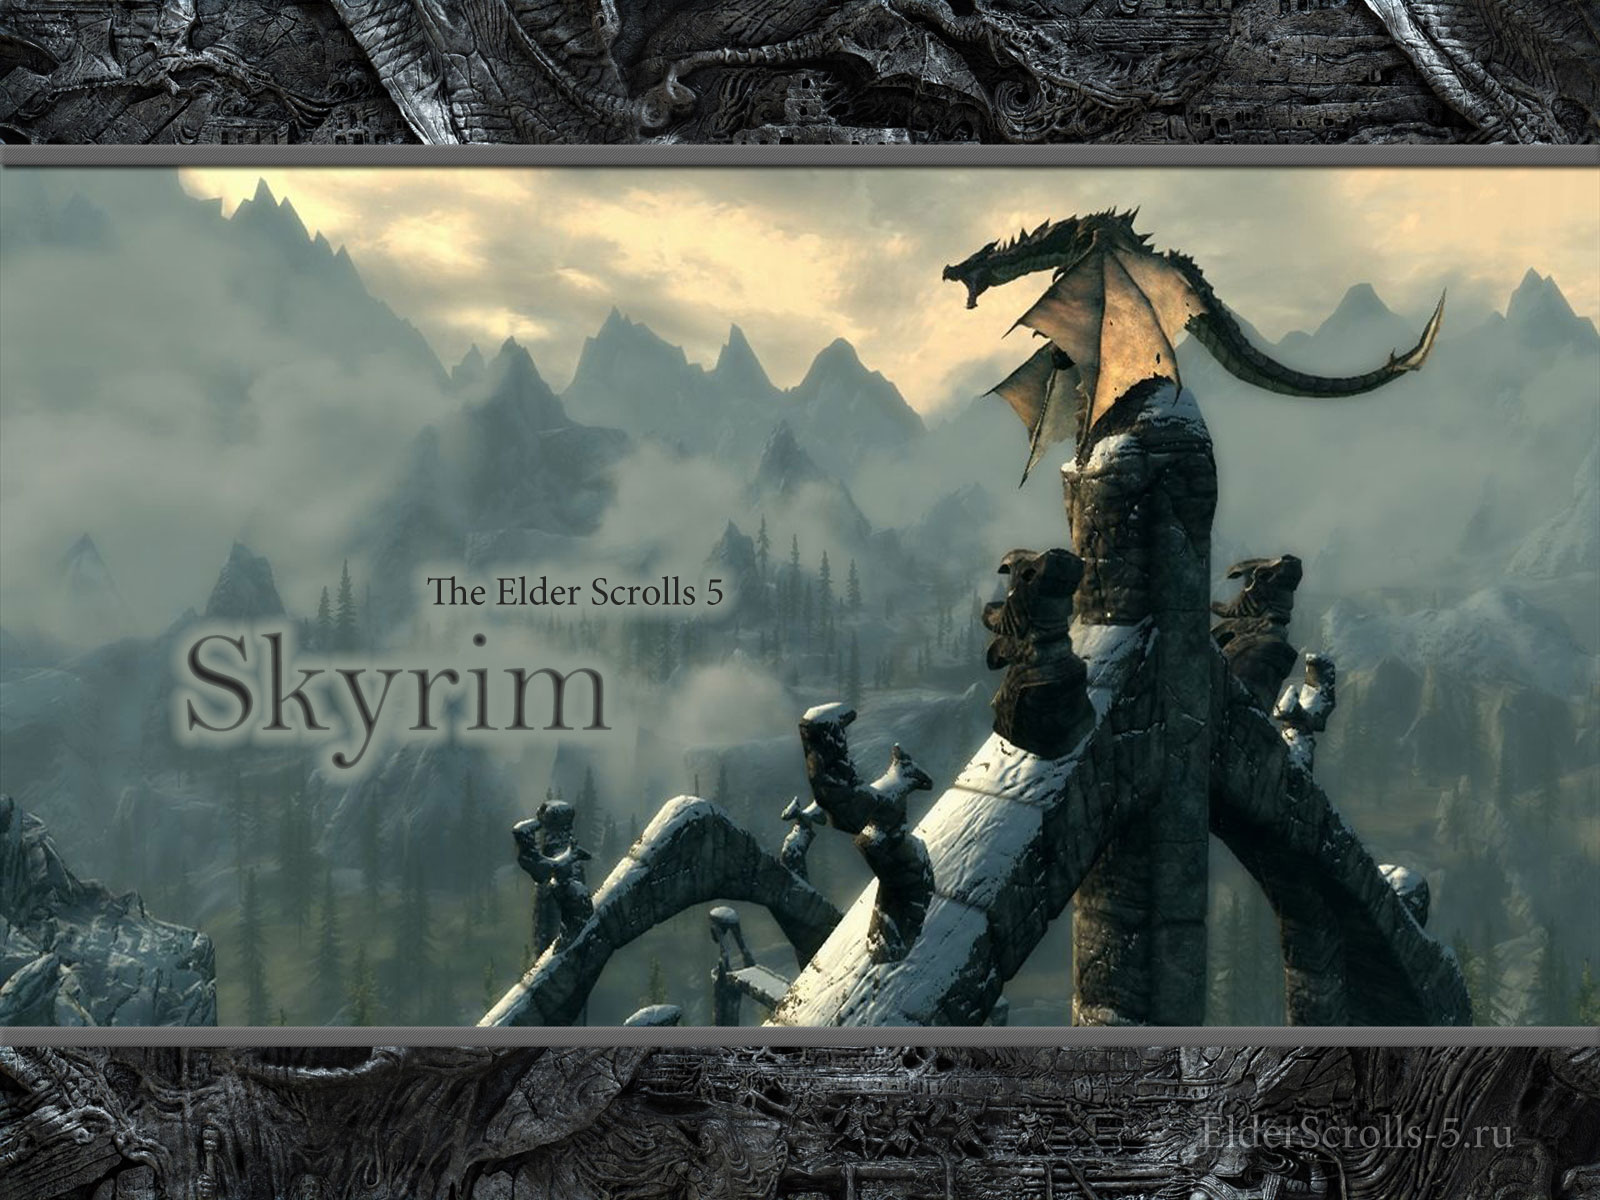 The Elder Scrolls V: Skyrim Picture